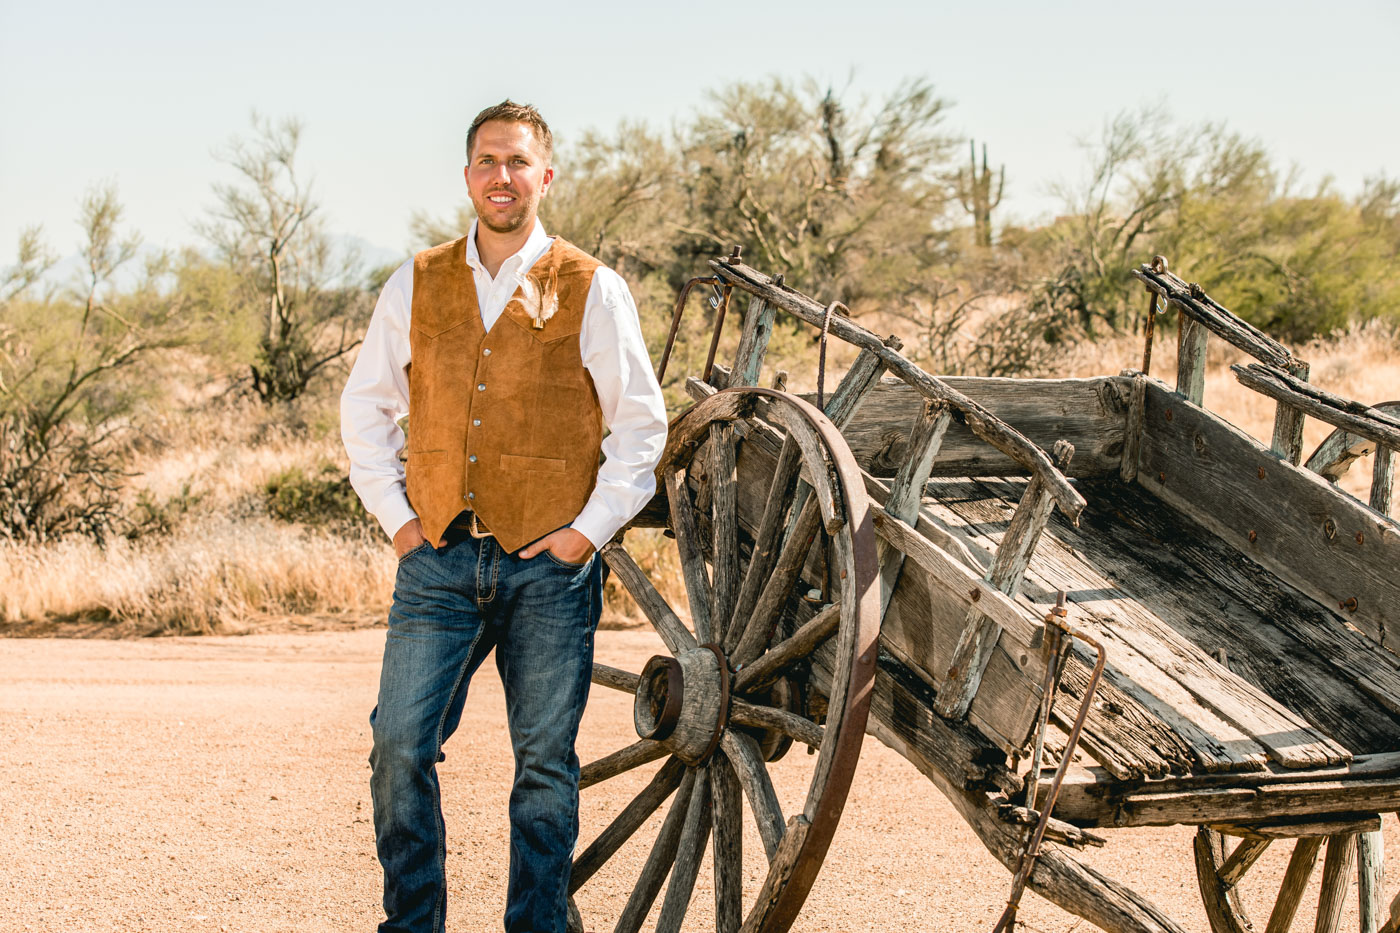 Groom smiling in front of antique wagon in desert